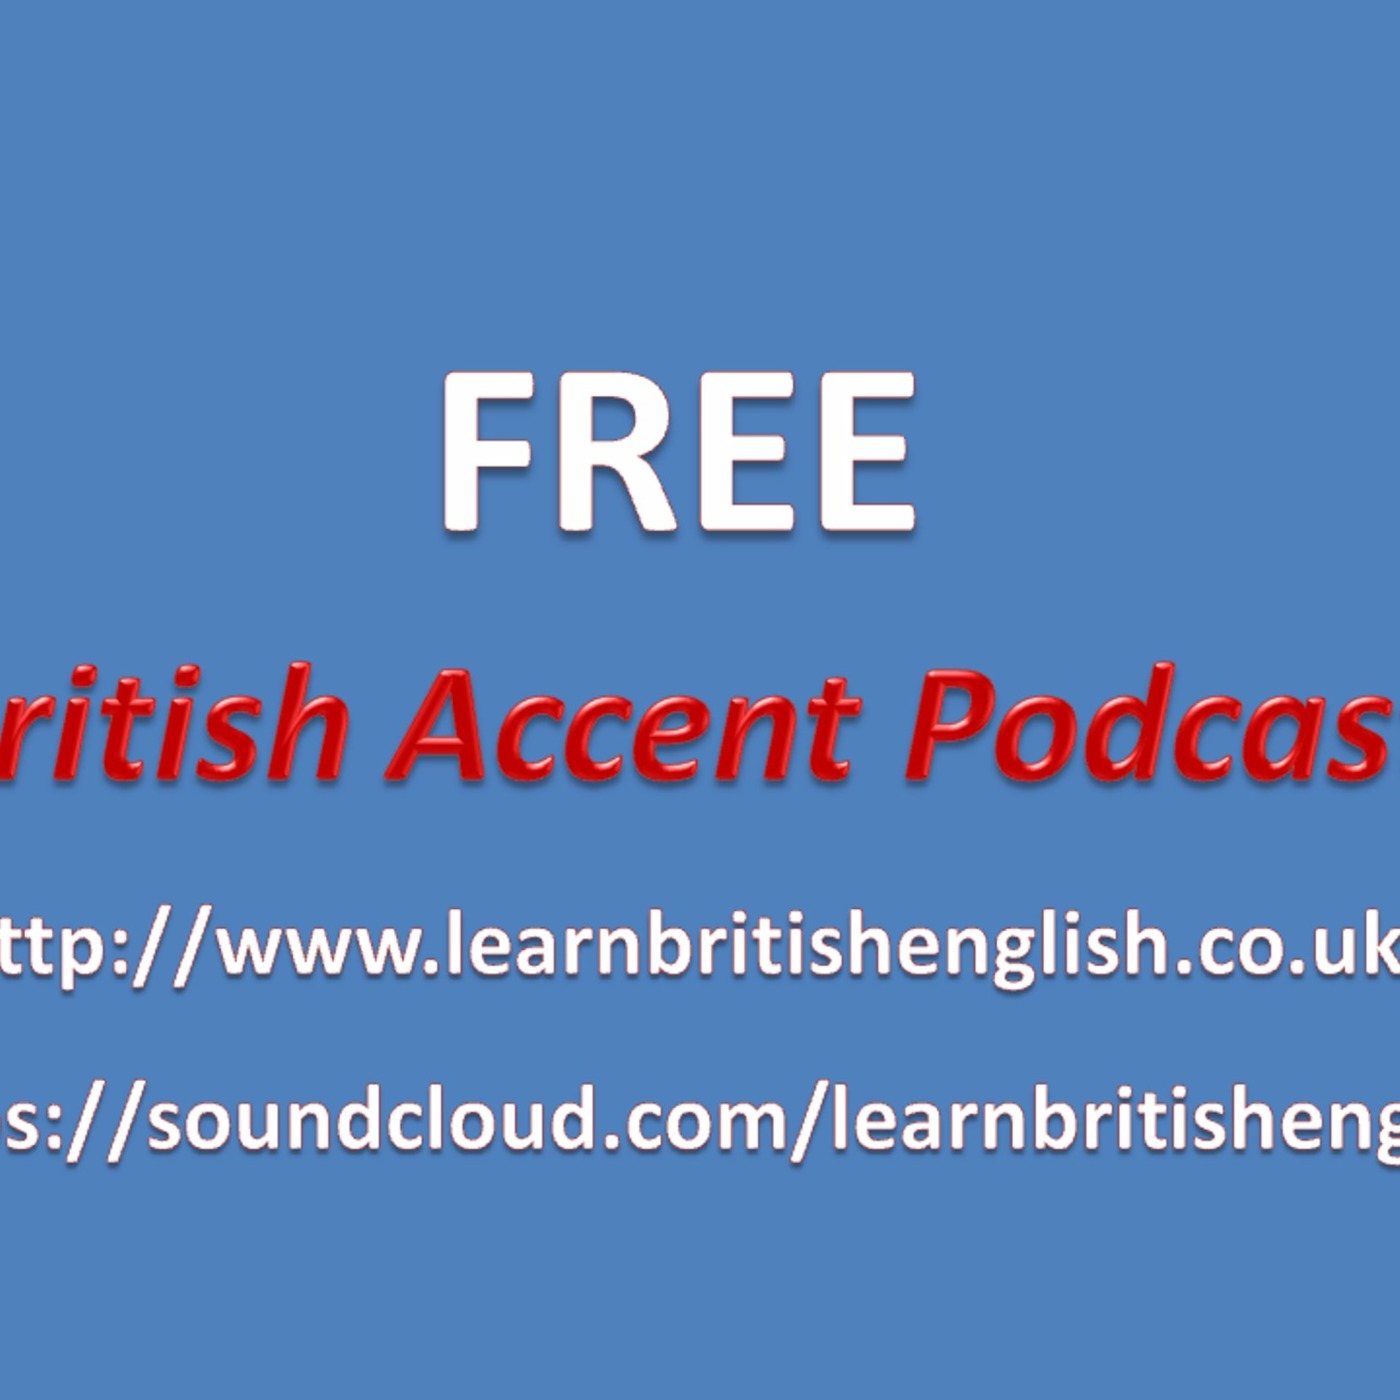 British Accent Podcast 38: Farm Animals